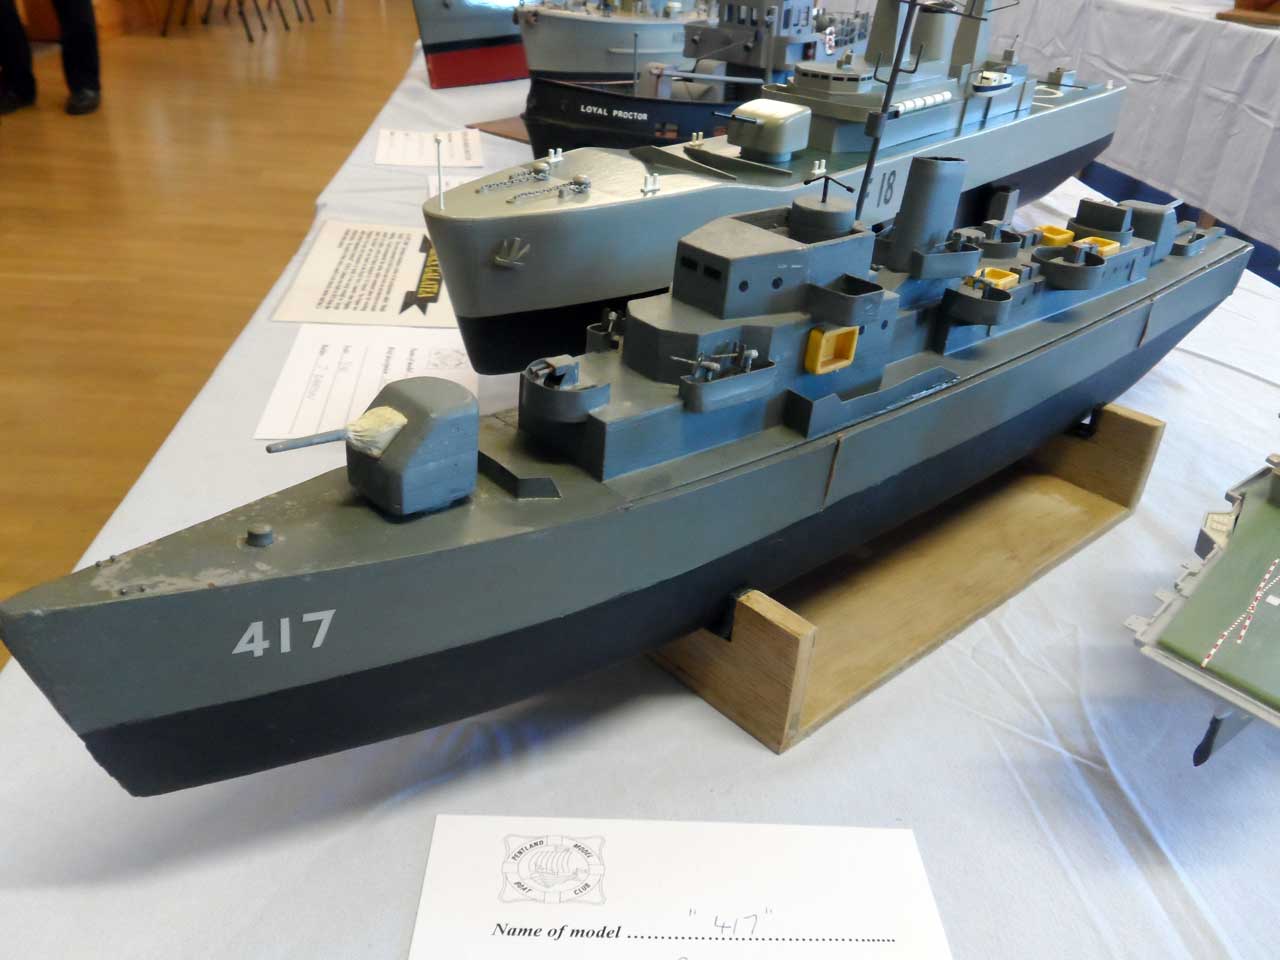 Photo: 417 - American Destroyer - WW2 - Model Boat Show 2015